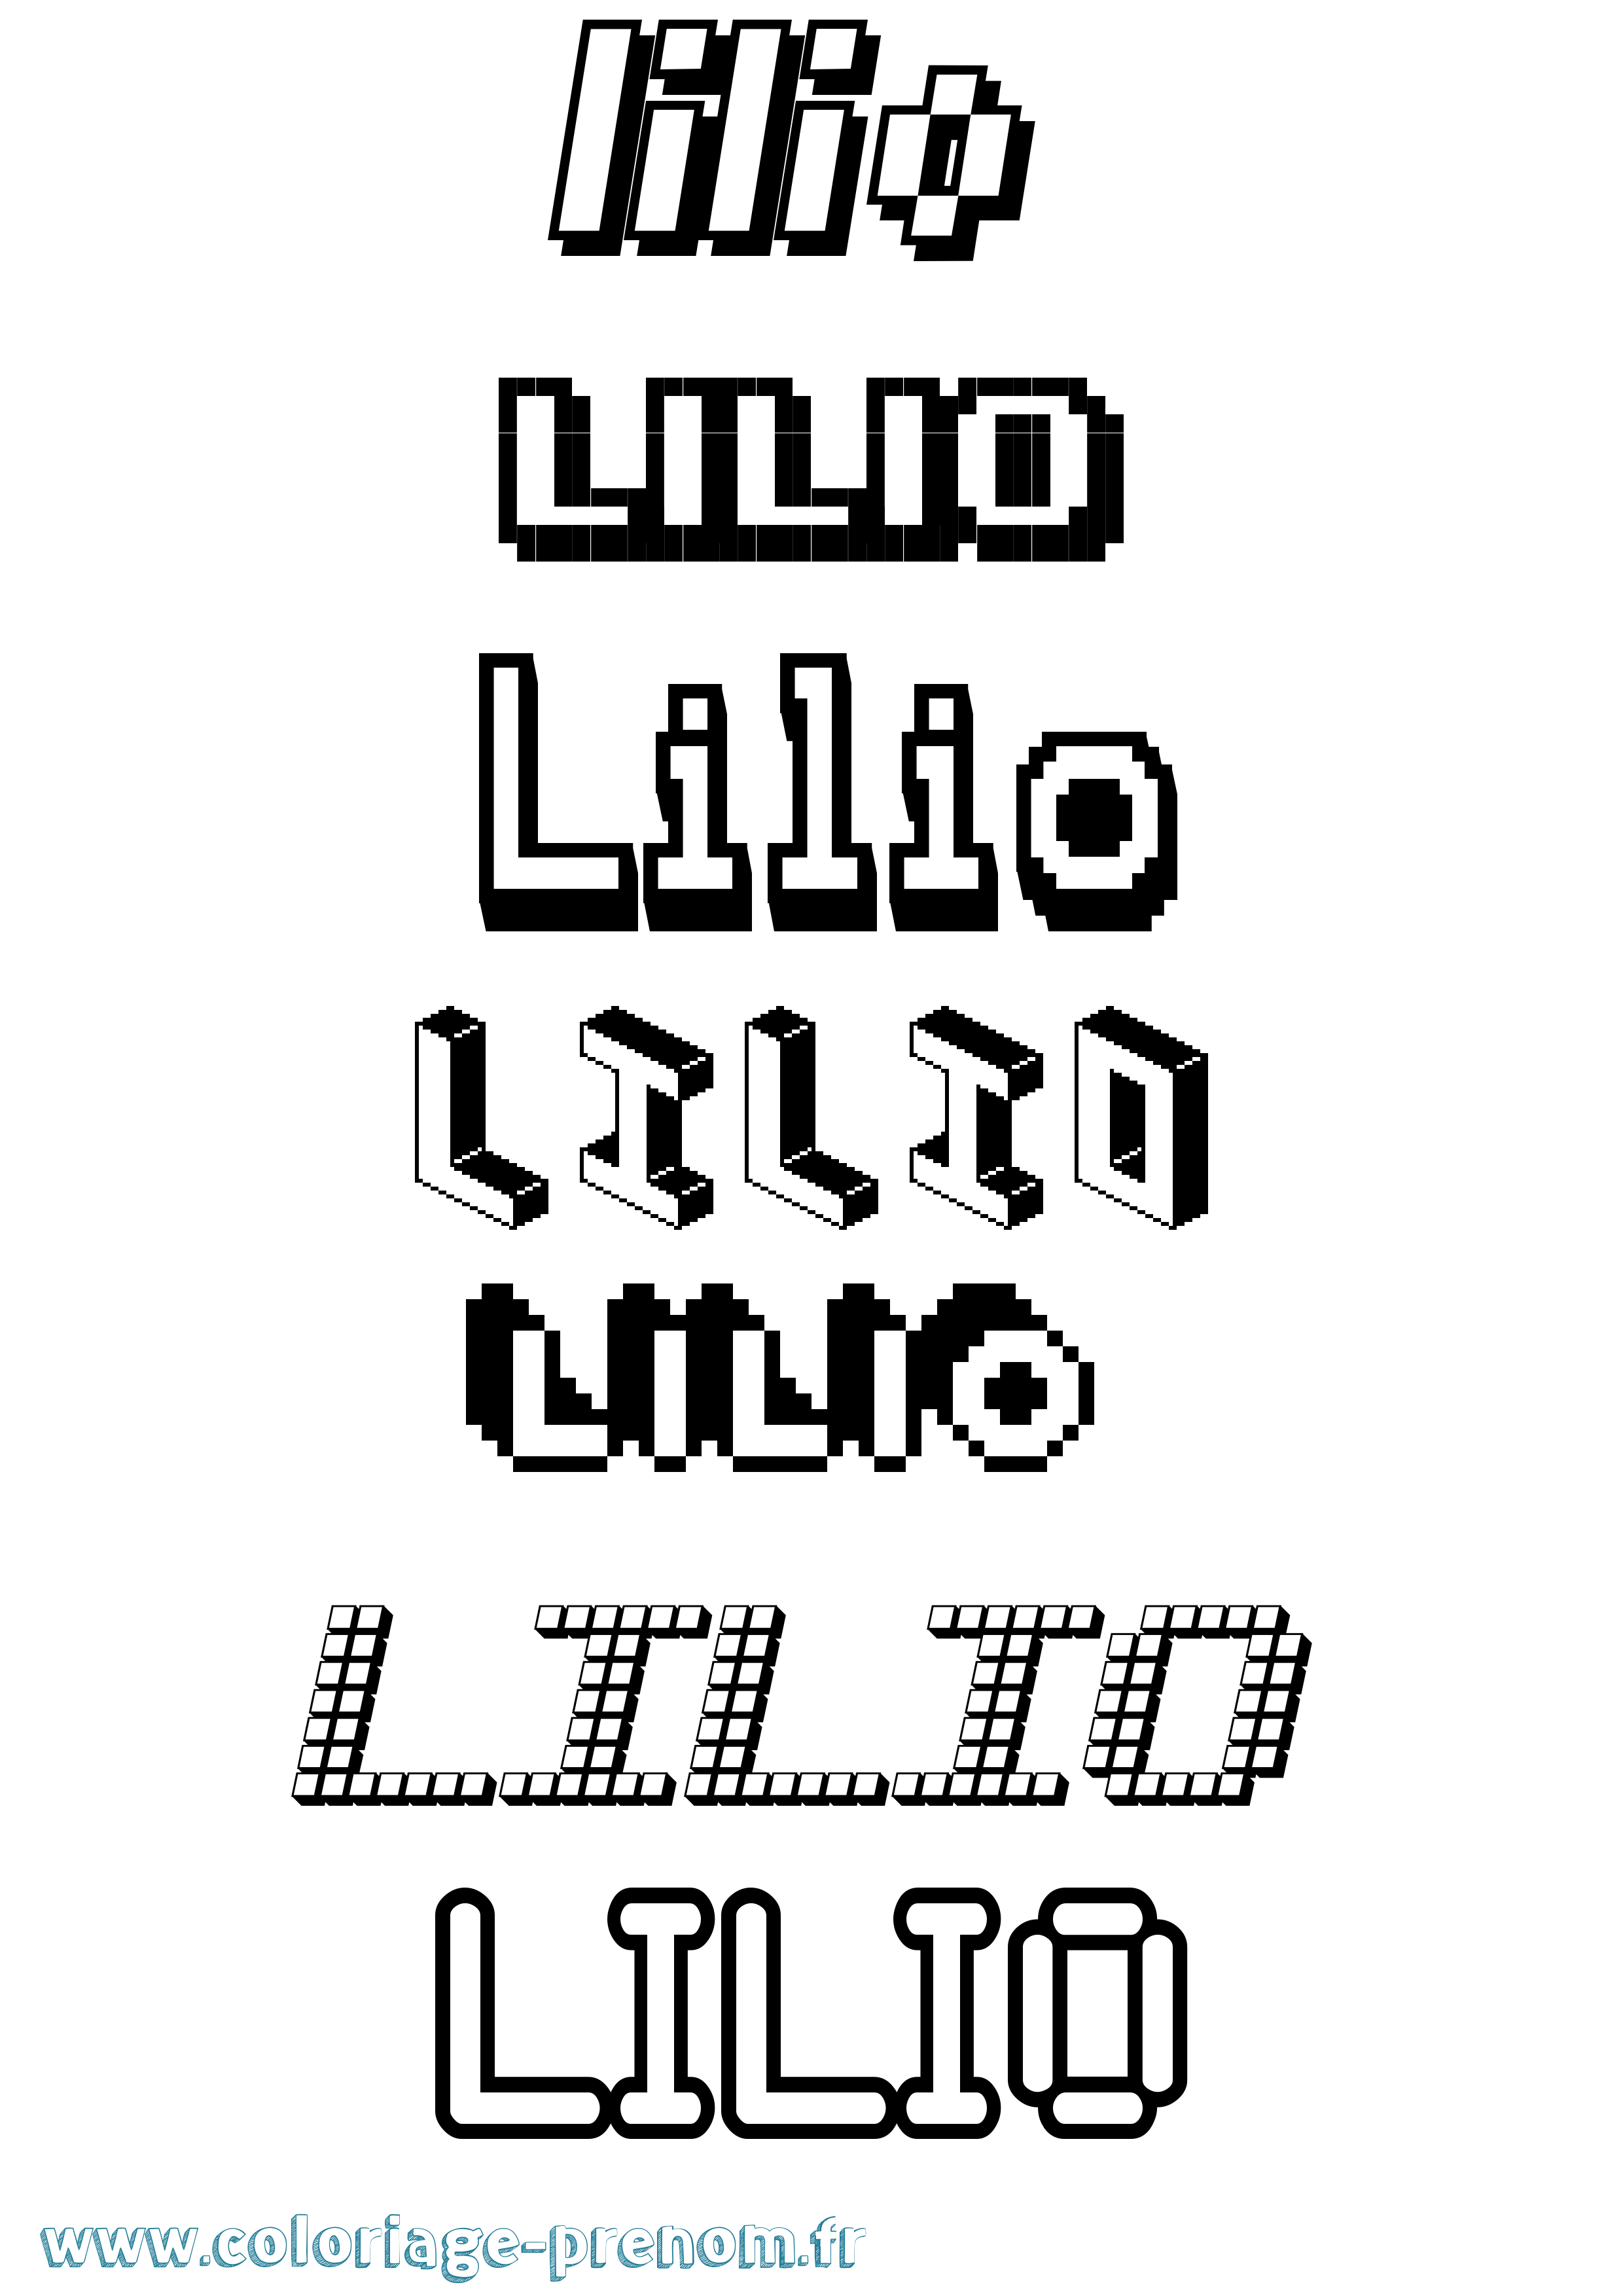 Coloriage prénom Lilio Pixel